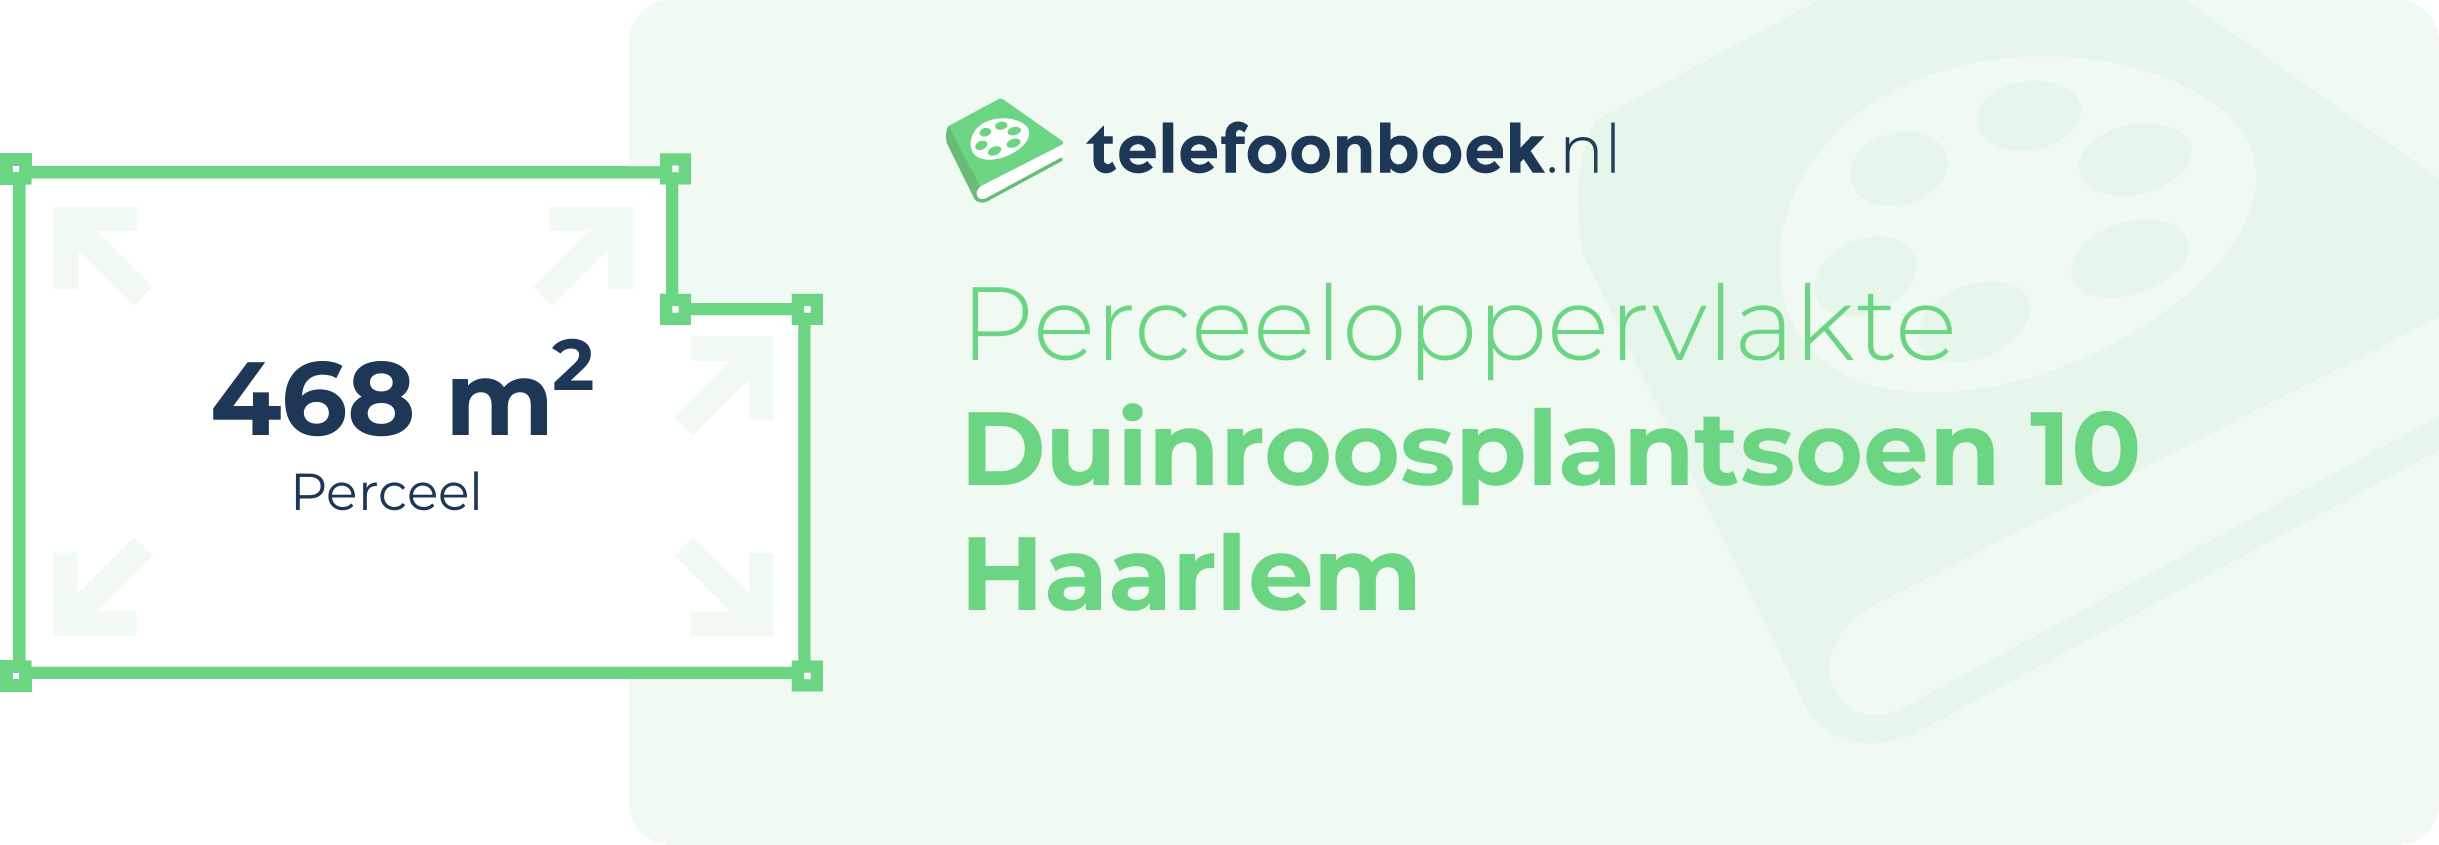 Perceeloppervlakte Duinroosplantsoen 10 Haarlem